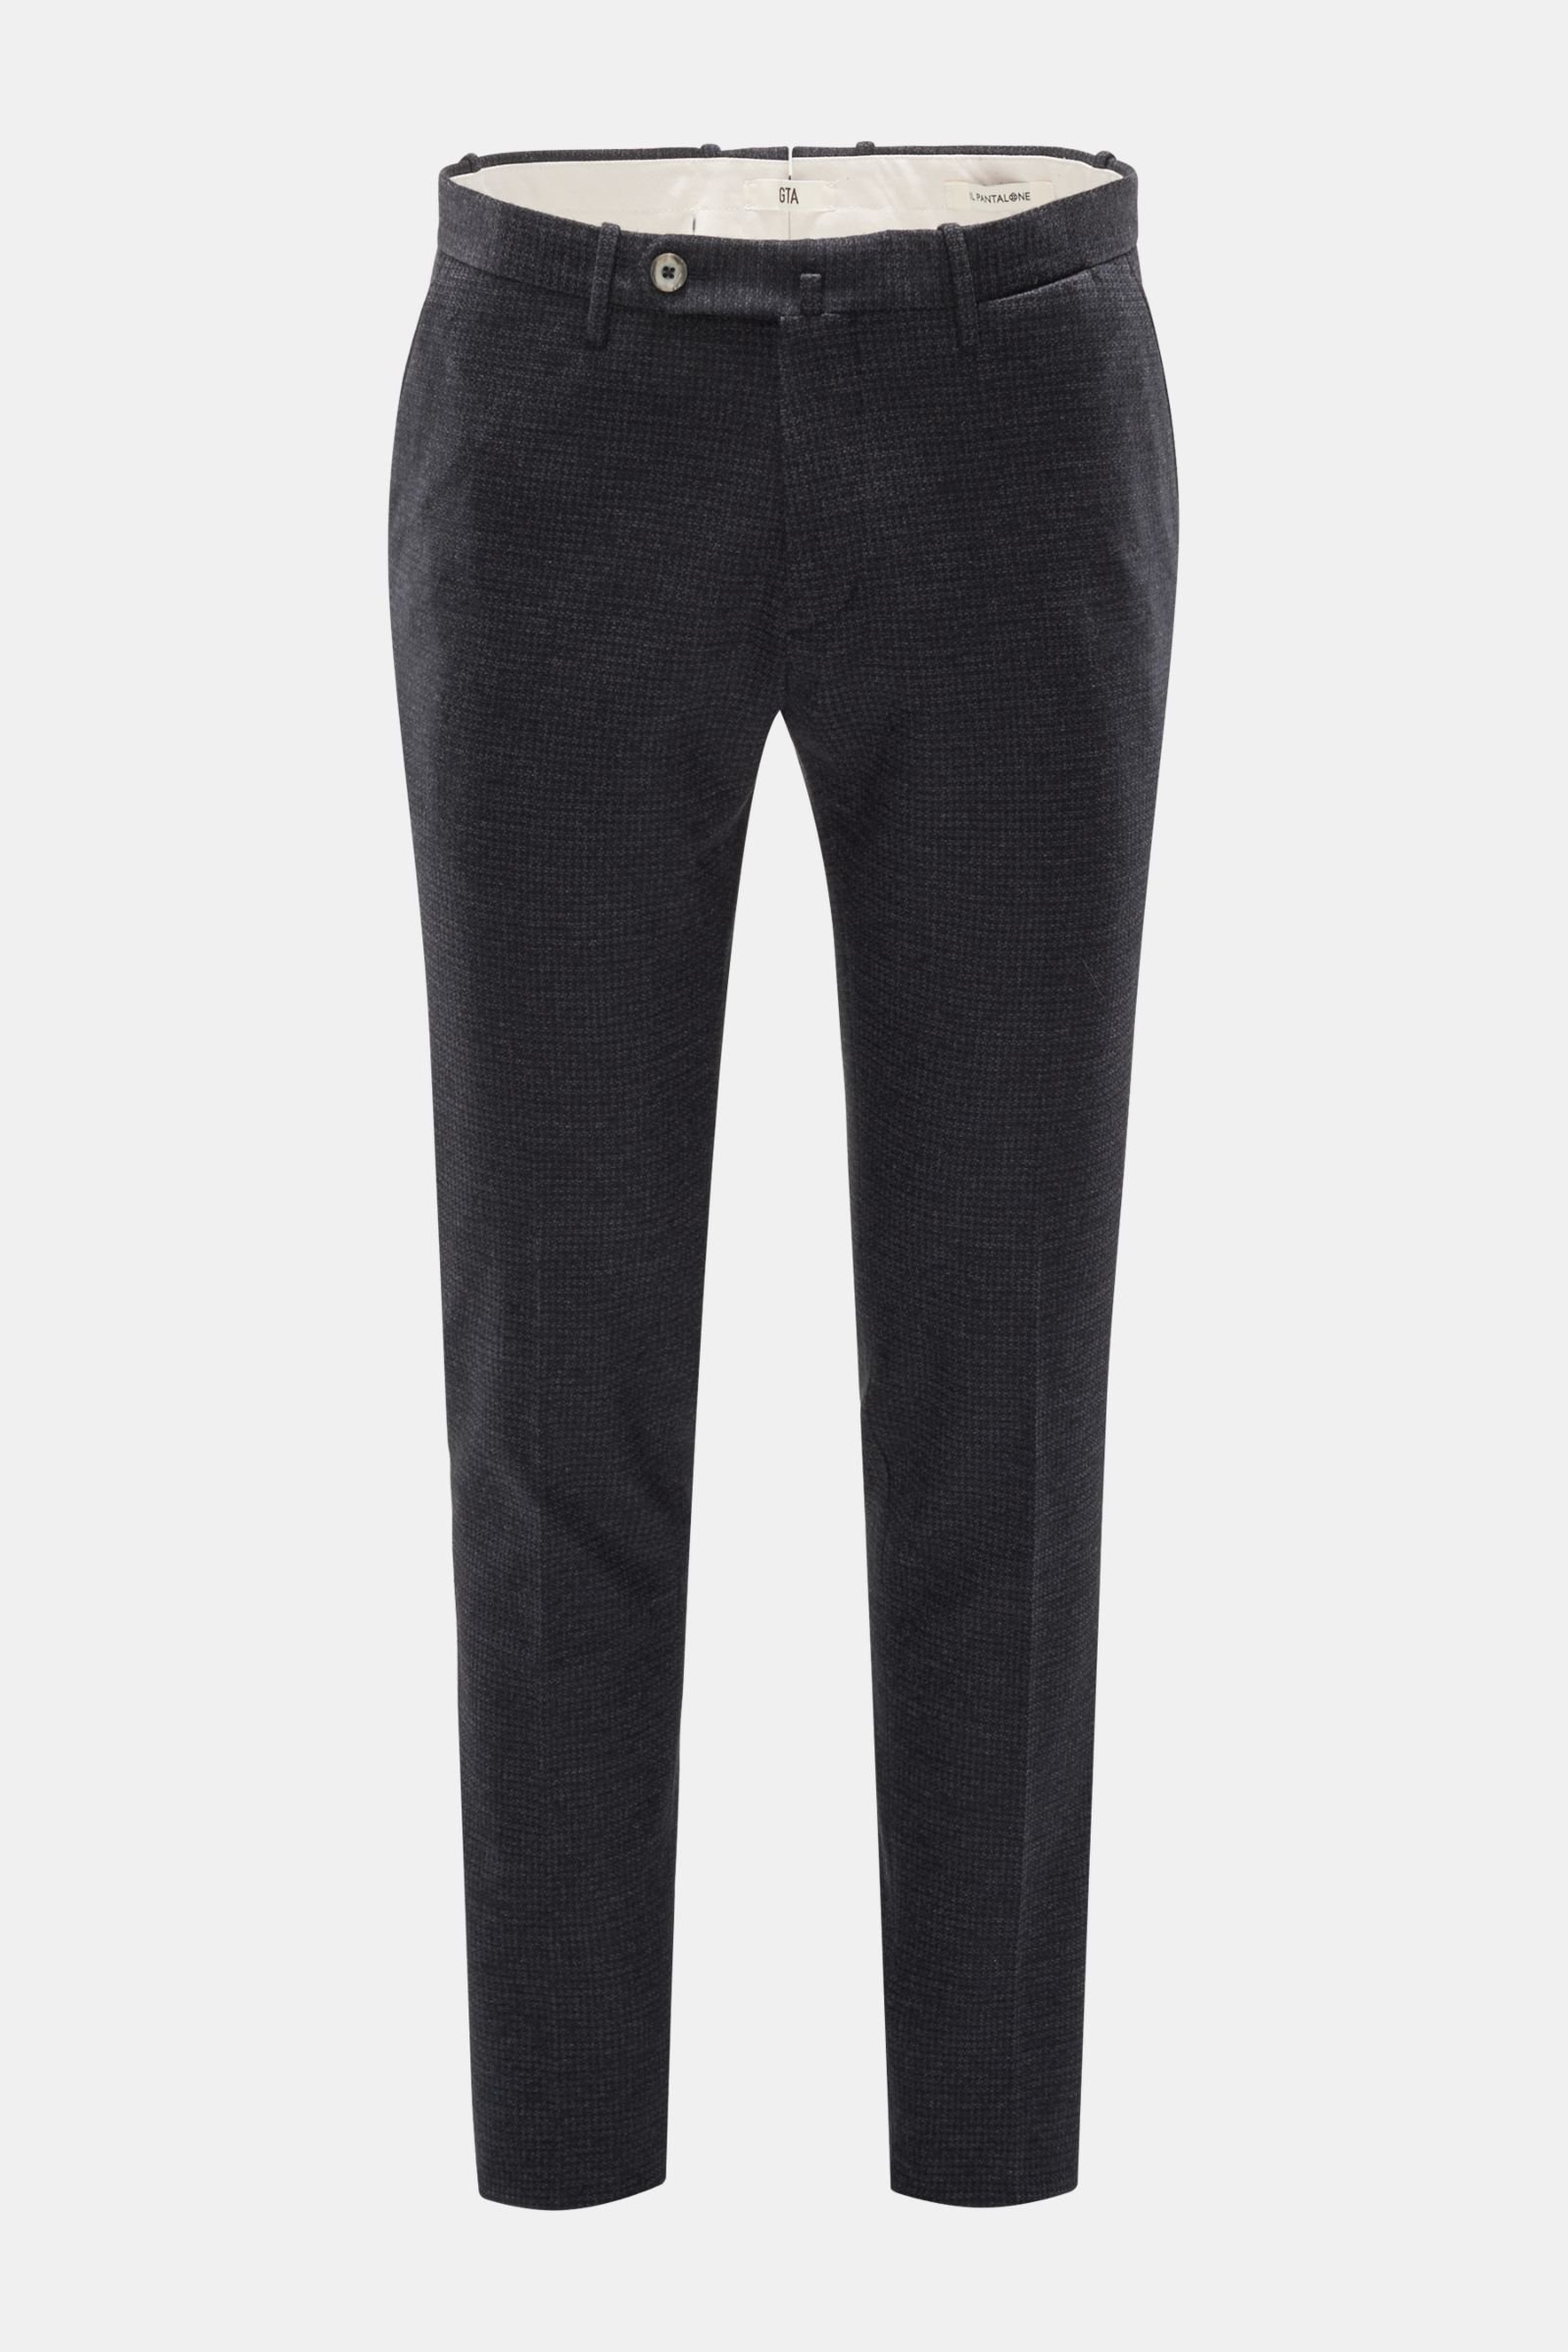 Jersey trousers 'Slim' navy/dark grey checked